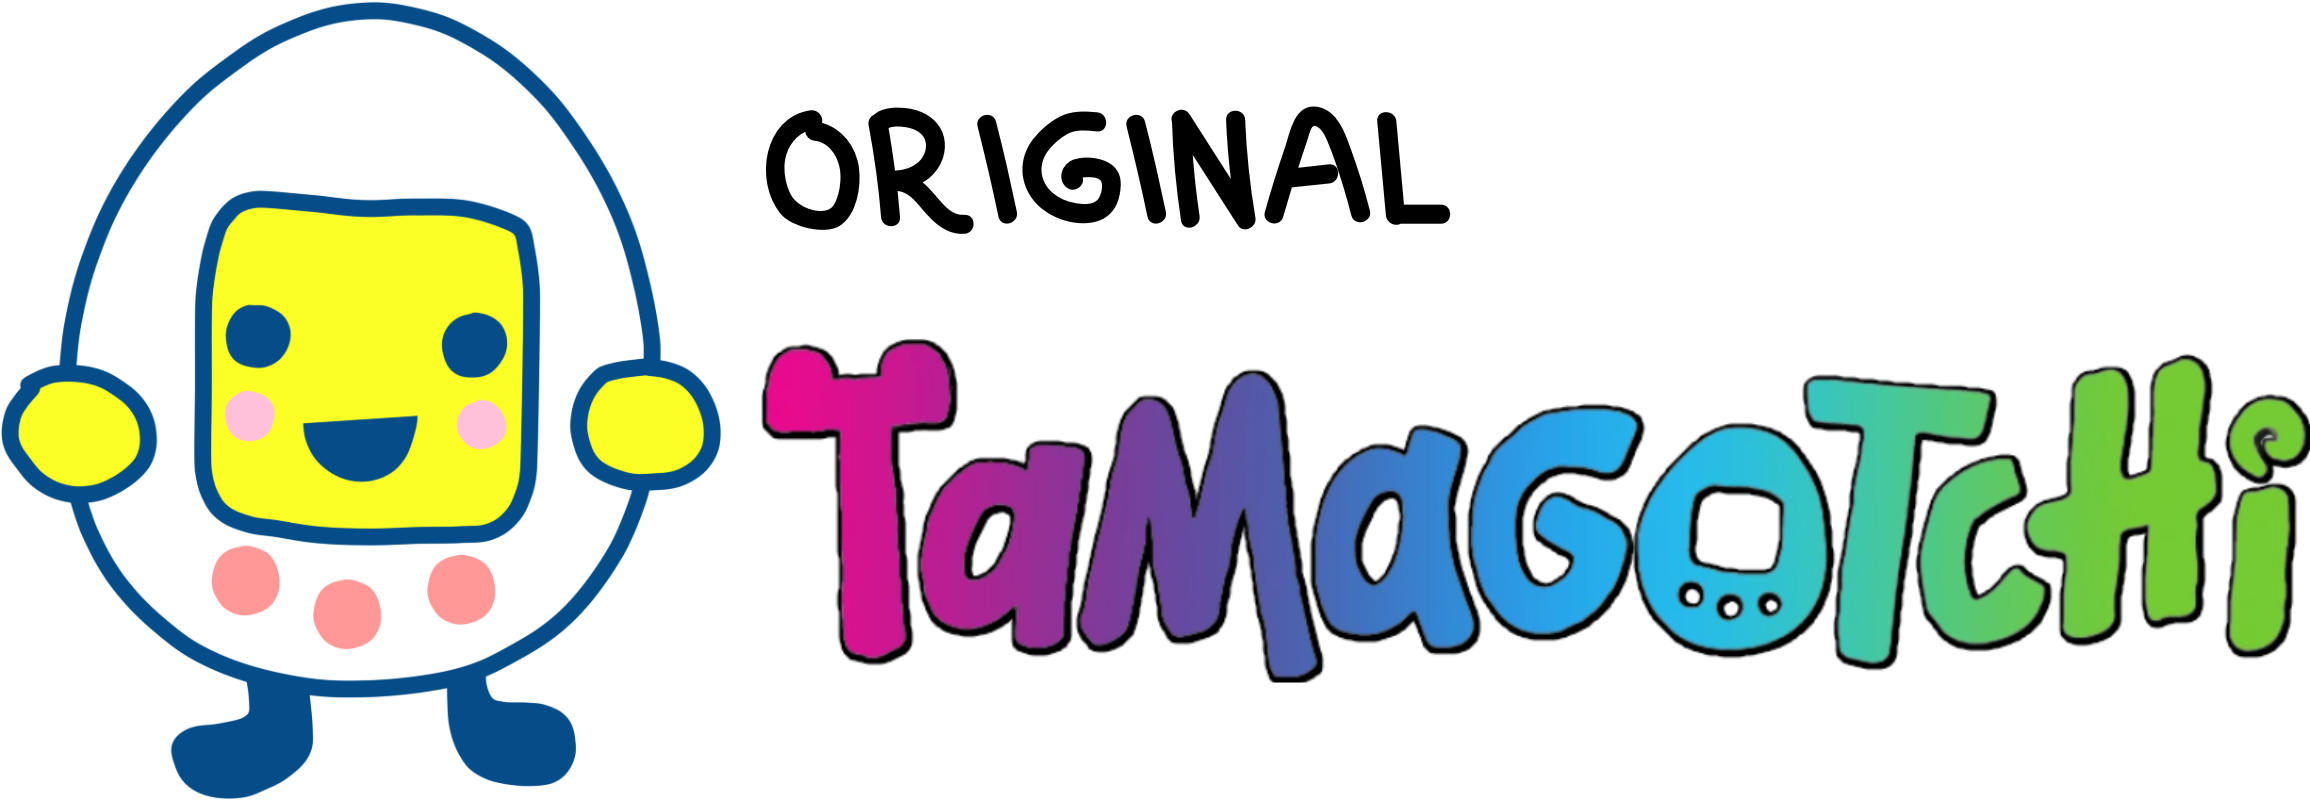 Original Tamagotchi